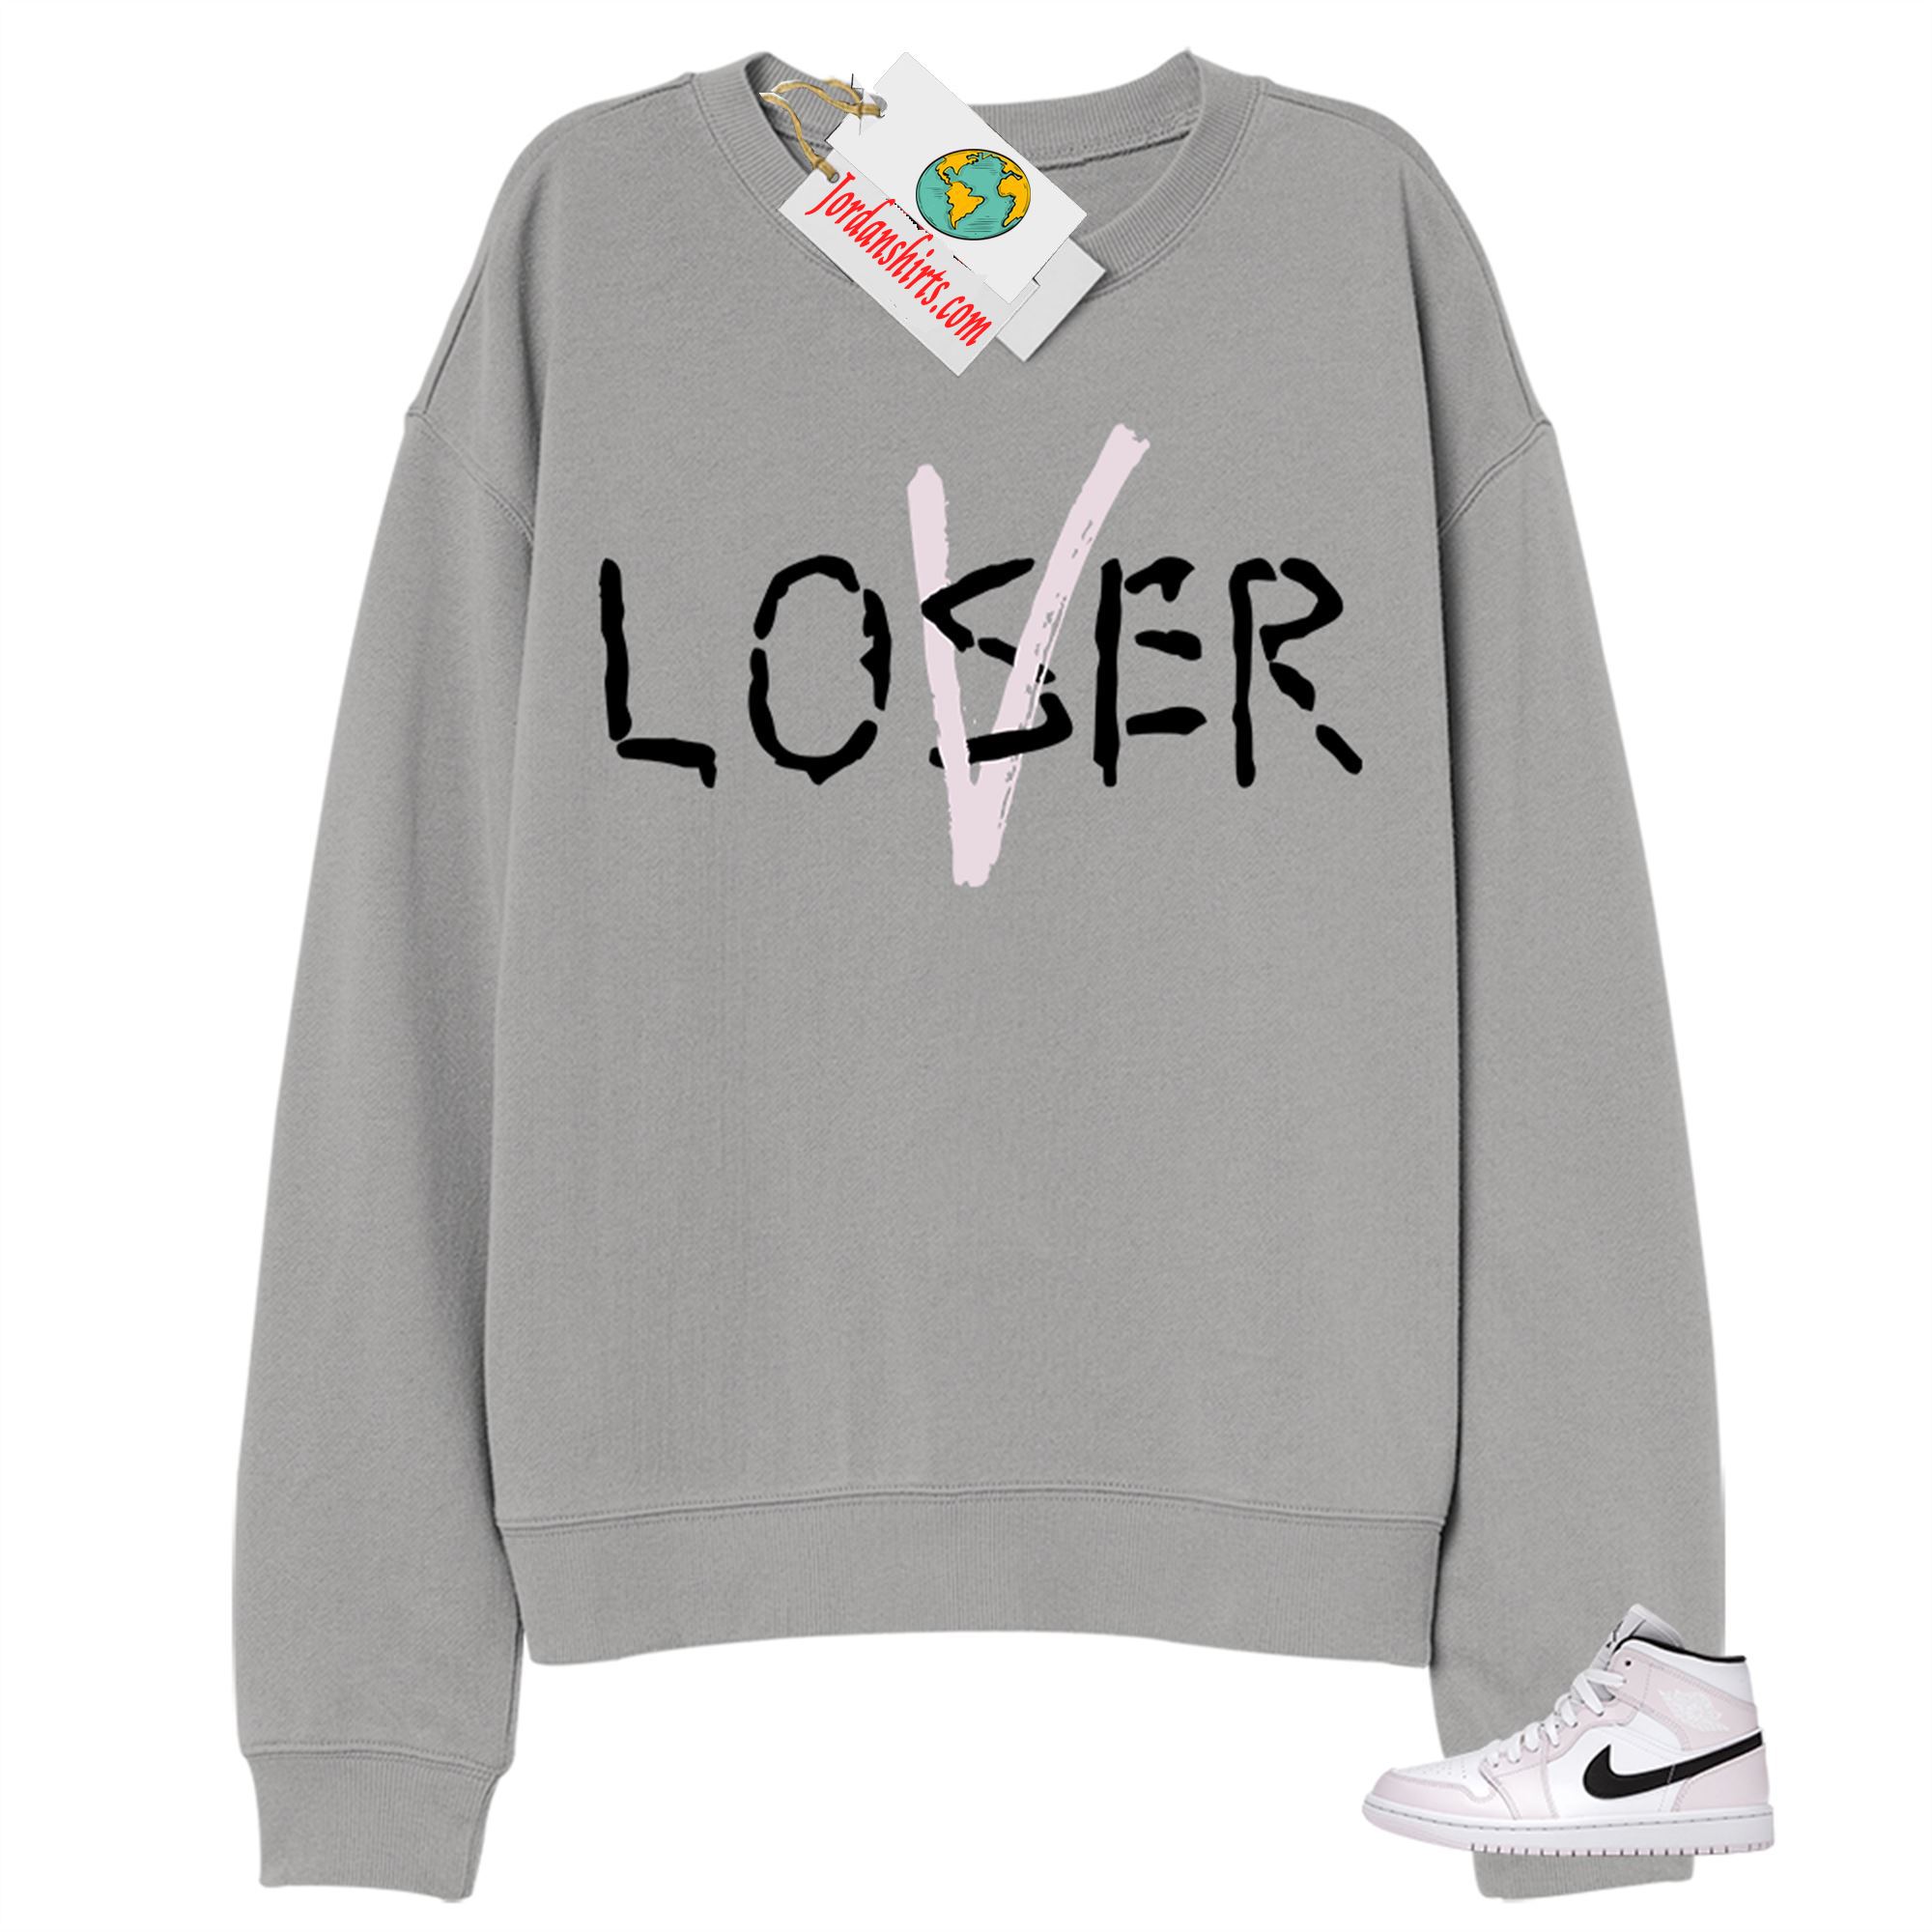 Jordan 1 Sweatshirt, Love A Loser Grey Sweatshirt Air Jordan 1 Barely Rose 1s Plus Size Up To 5xl